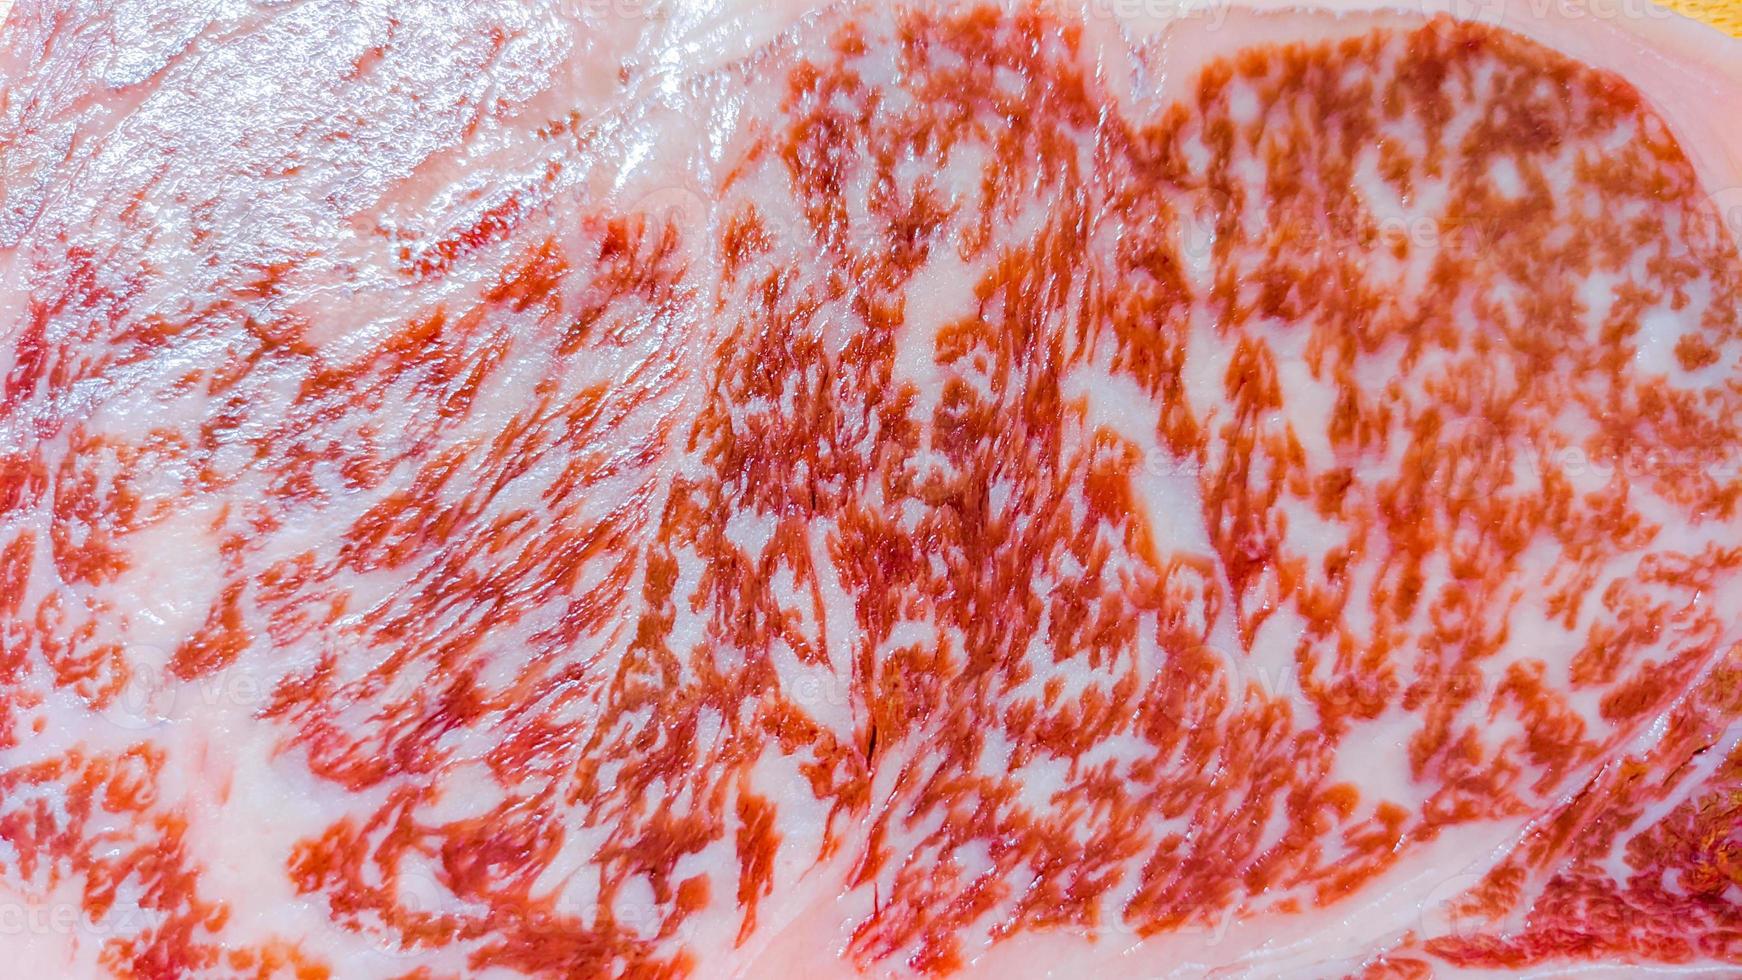 Kagoshima A5 Wagyu Ribeye from Nozaki farm, Kyushu, Japan. Premium grade meat. Close up view. Macro photo